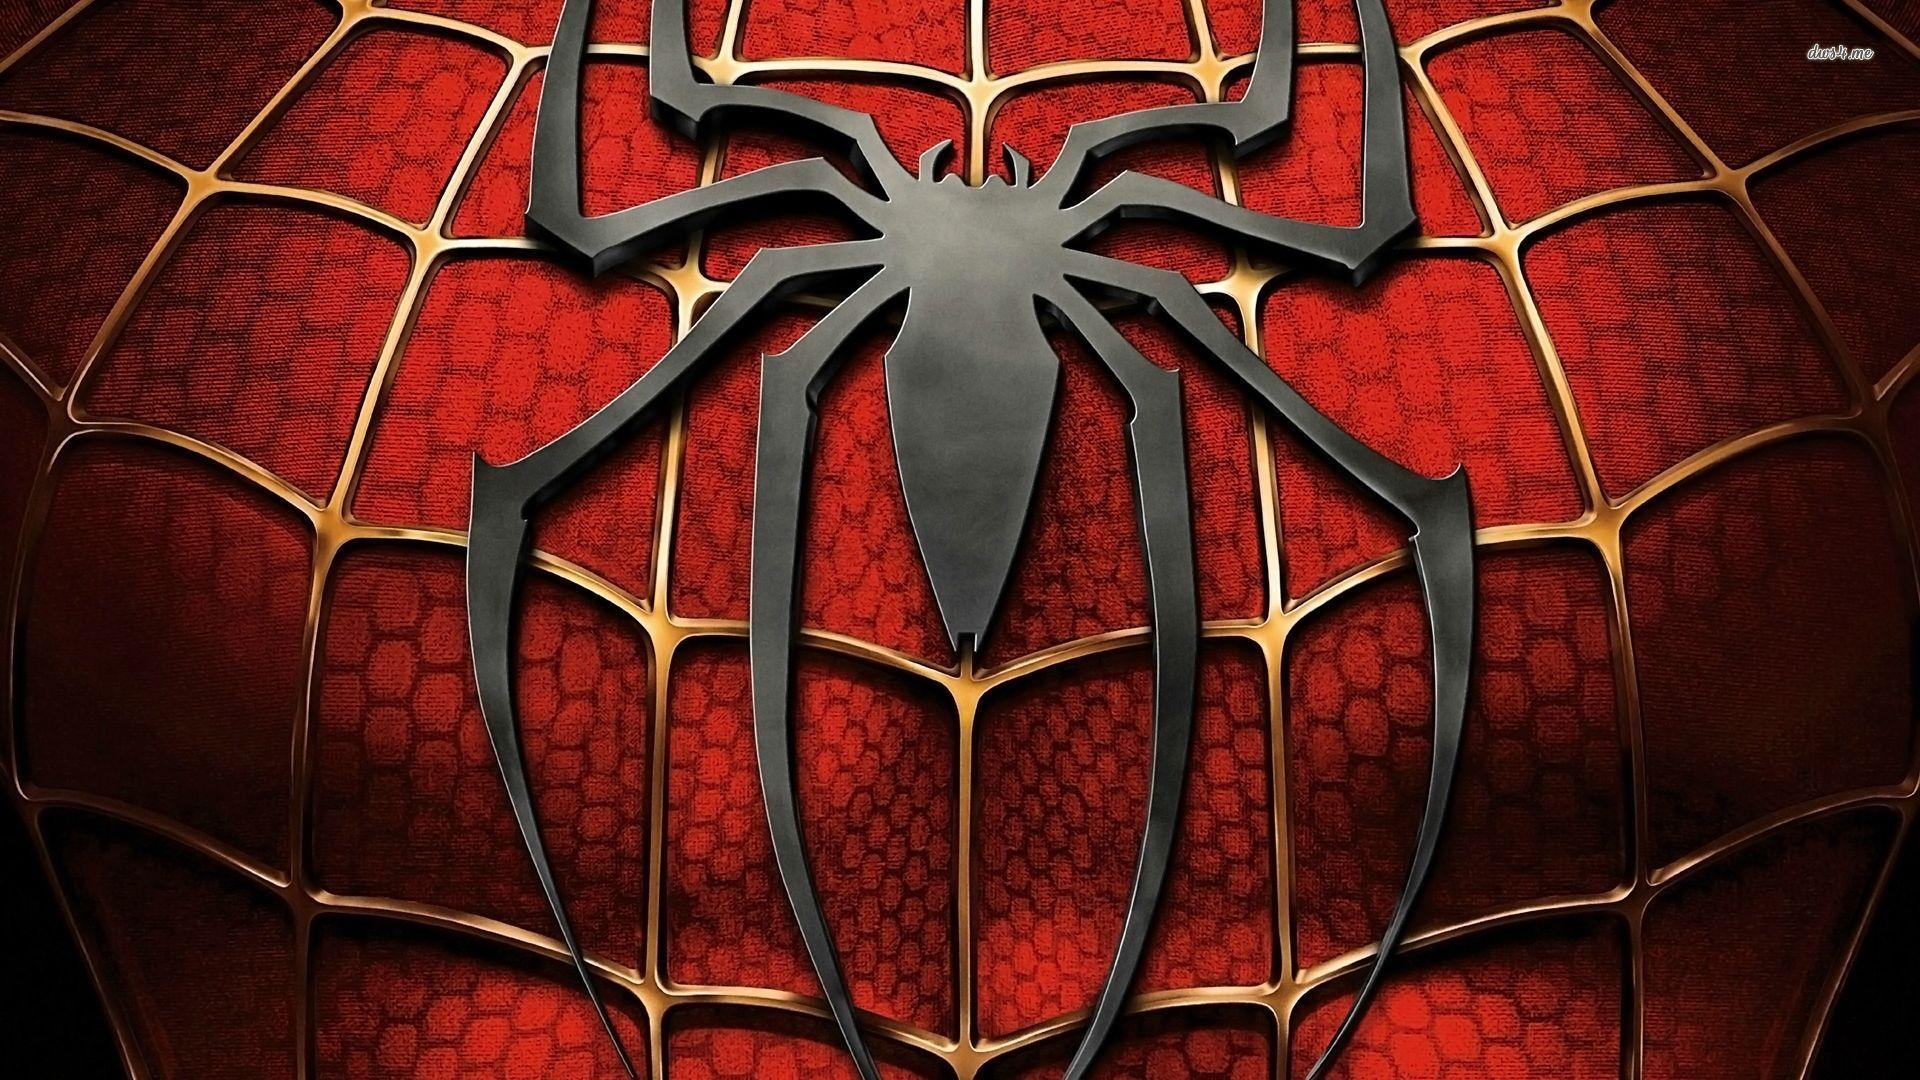 Amazing Spider Man Wallpaper HD 1920×1080 The Amazing Spider Man 2